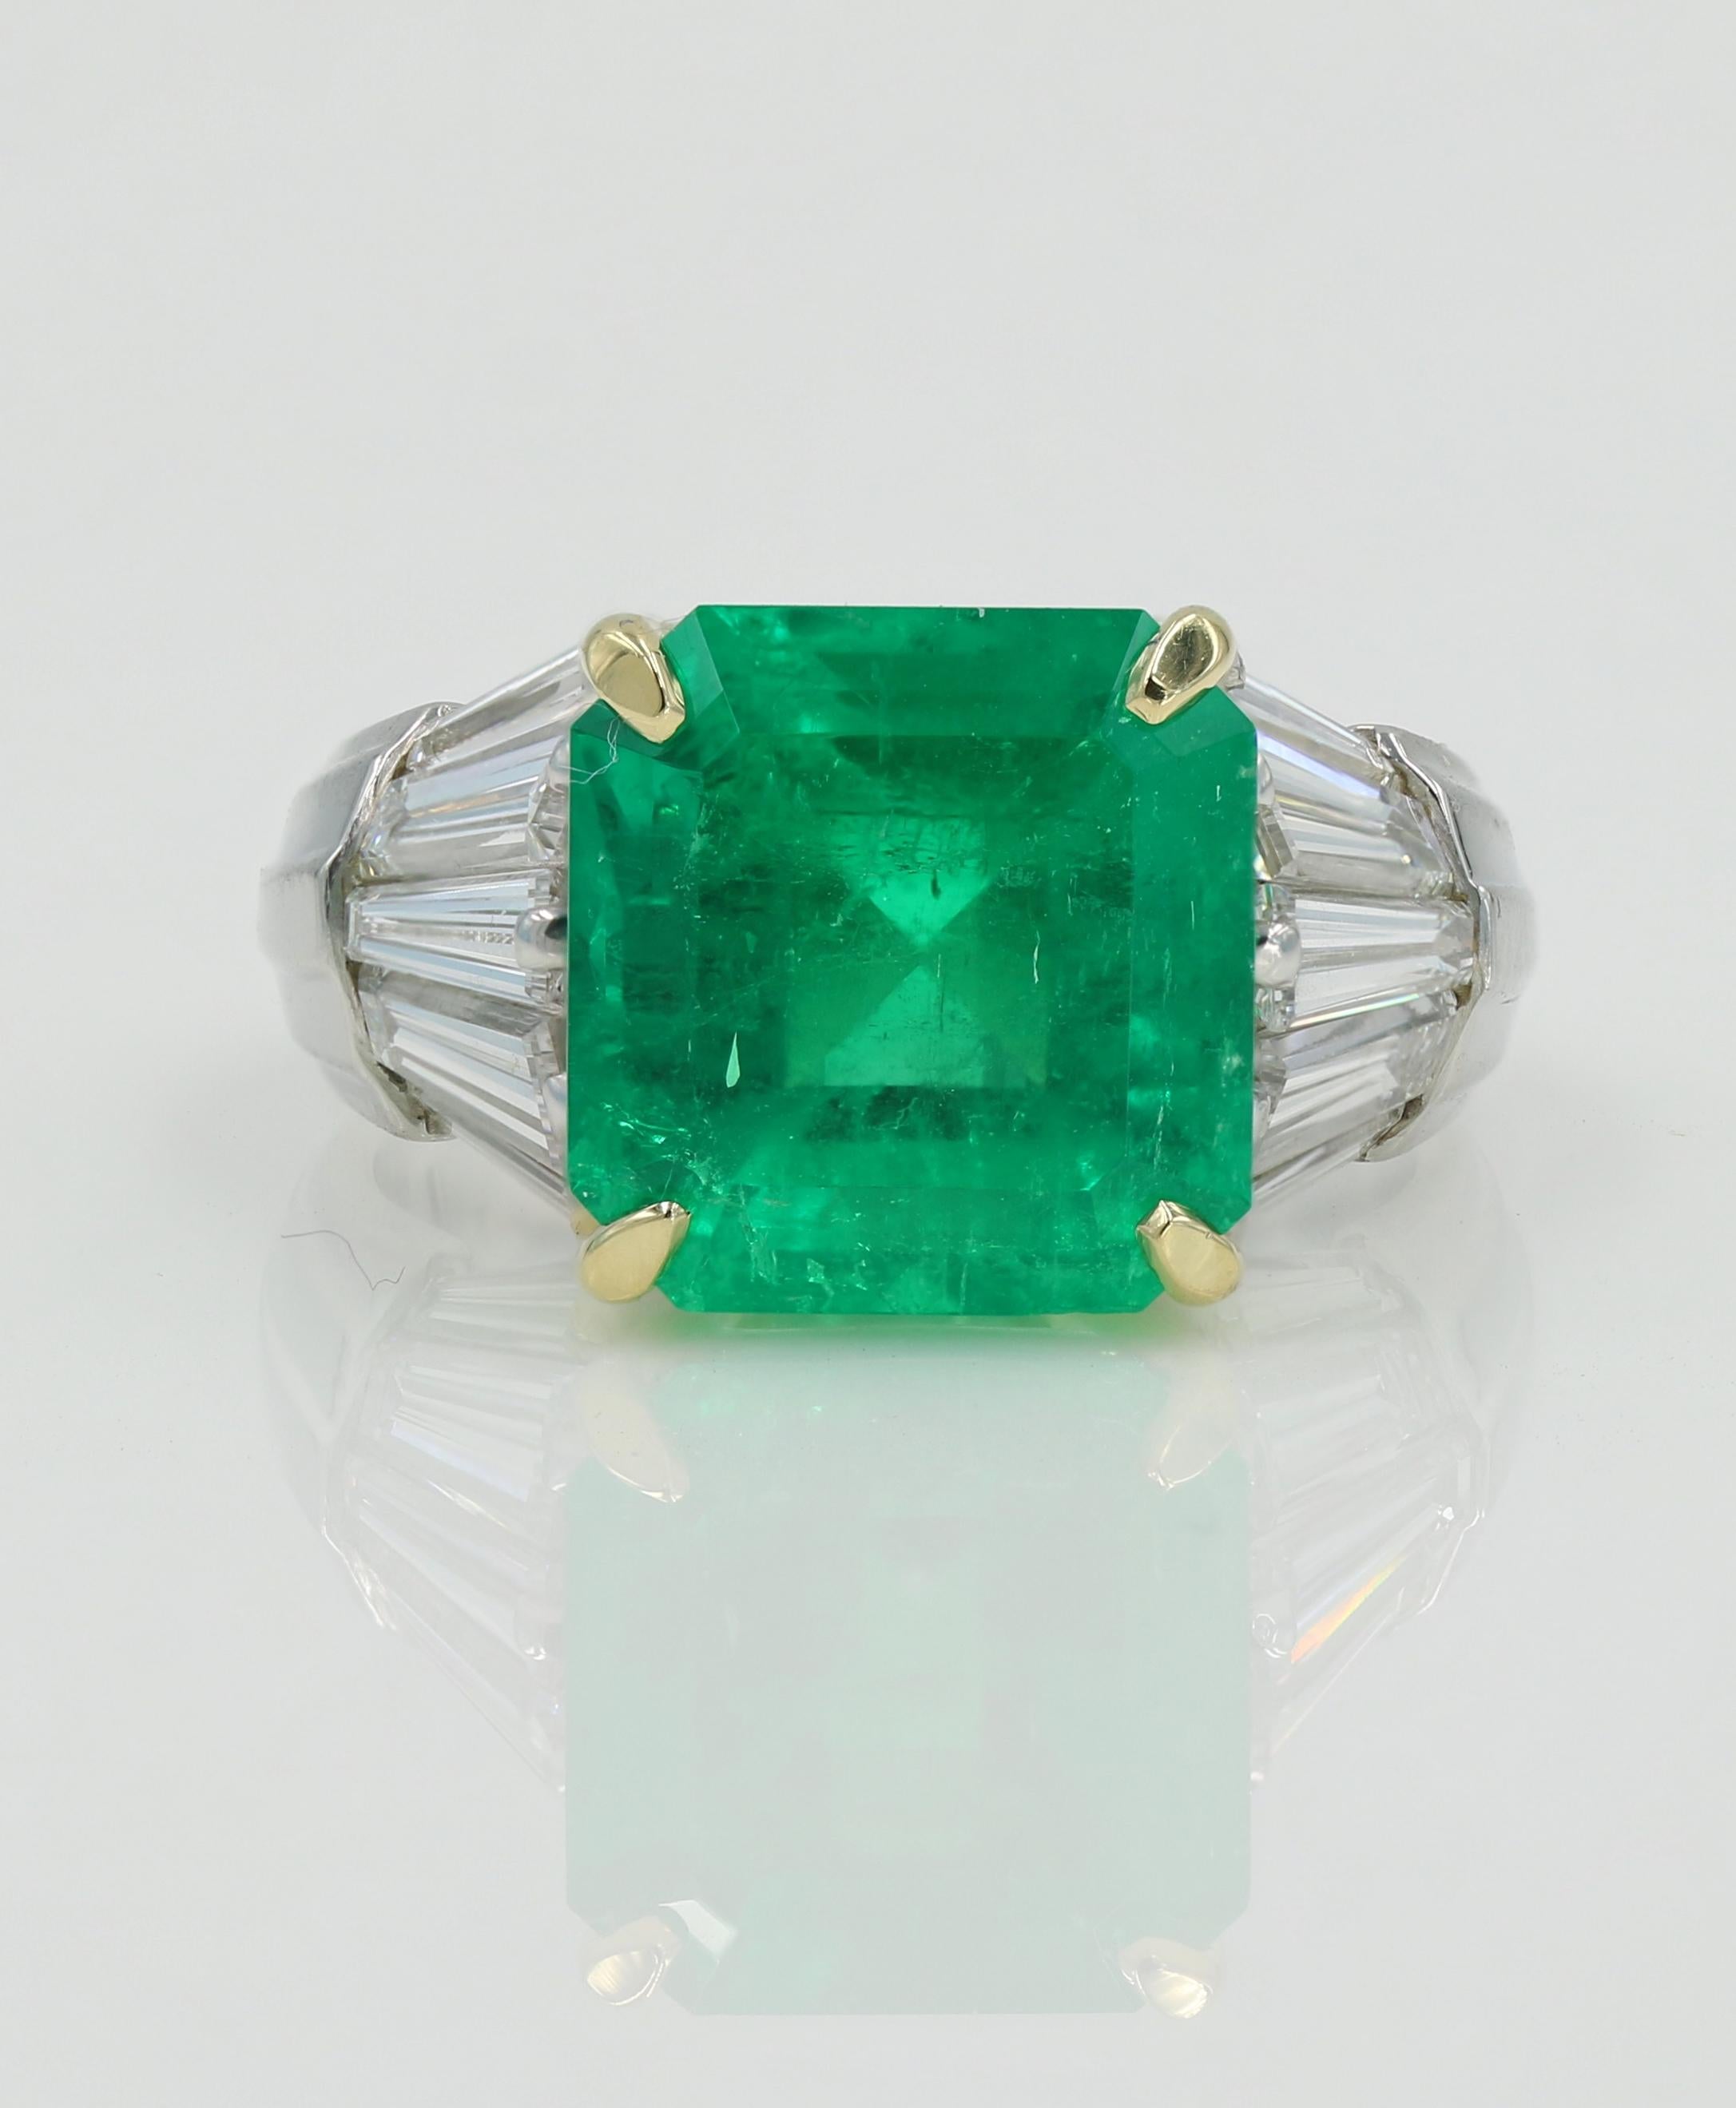 Natural Green Emerald & Diamond Ring: 6.66cts Square Emerald Cut Emerald, Colombian origin (minor treatment). AGL 